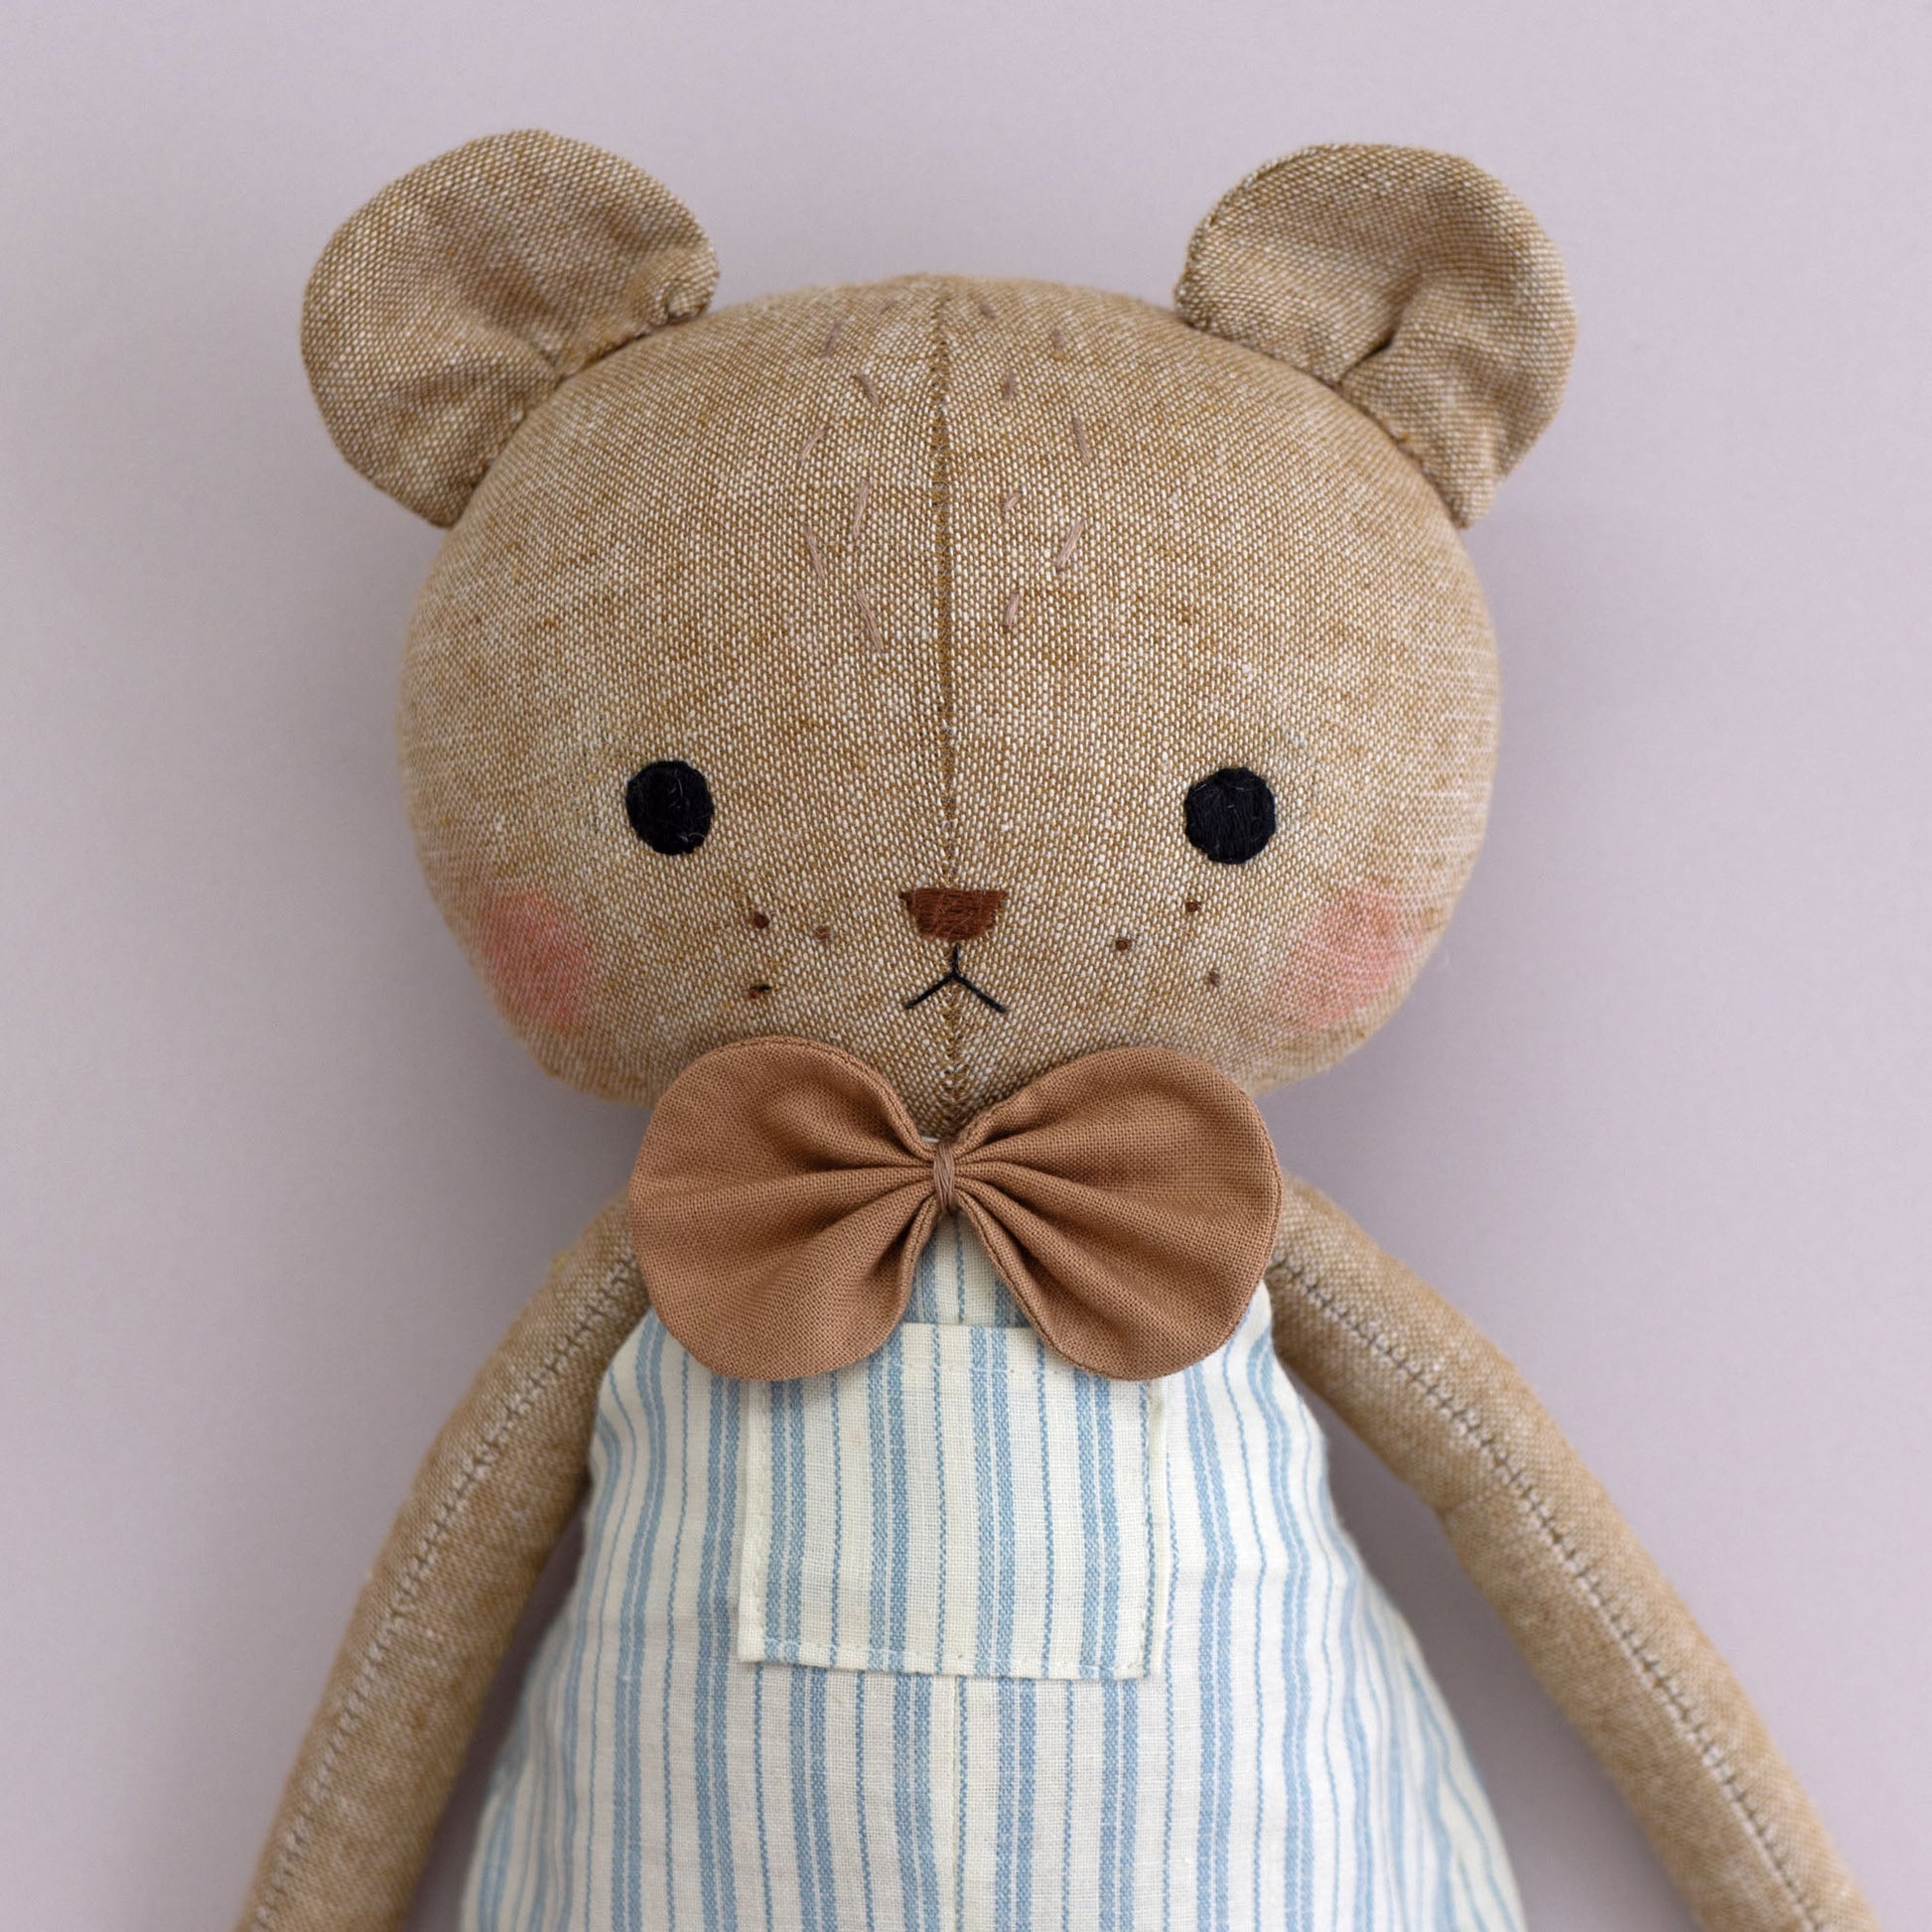 Teddy bear sewing pattern and tutorial - Studio Seren